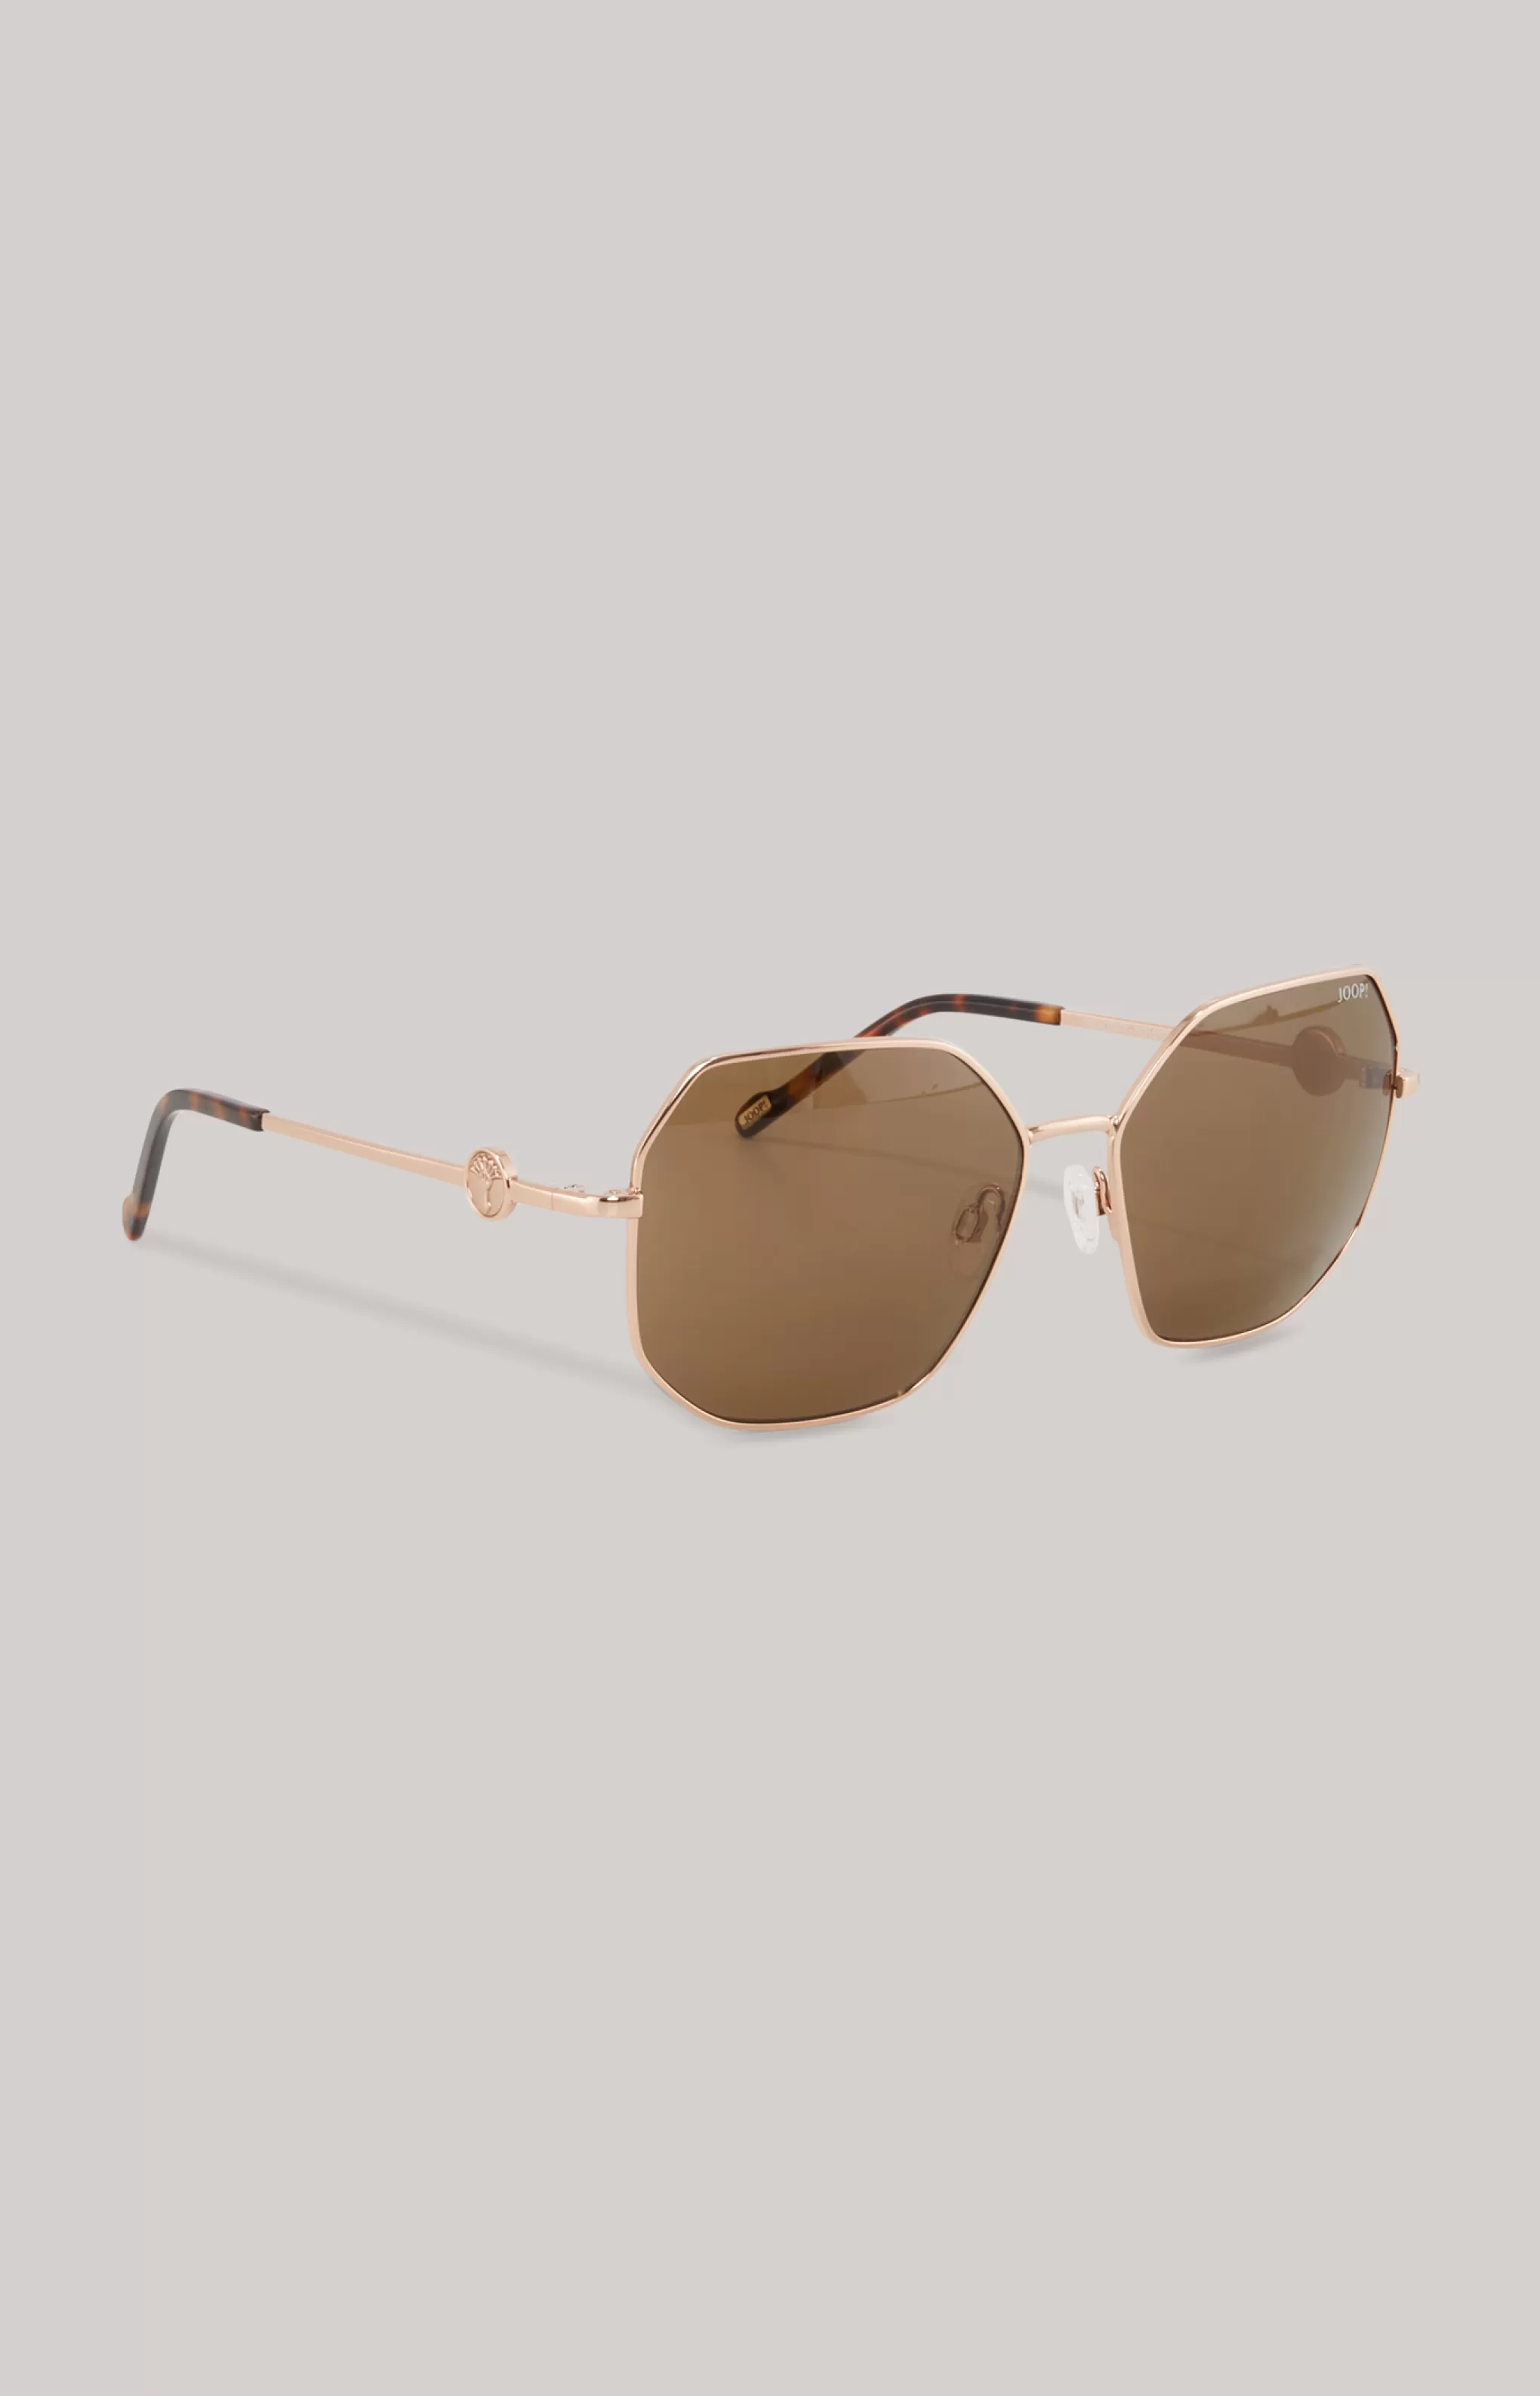 Sunglasses*JOOP Sunglasses Rosegold/brown sunglasses